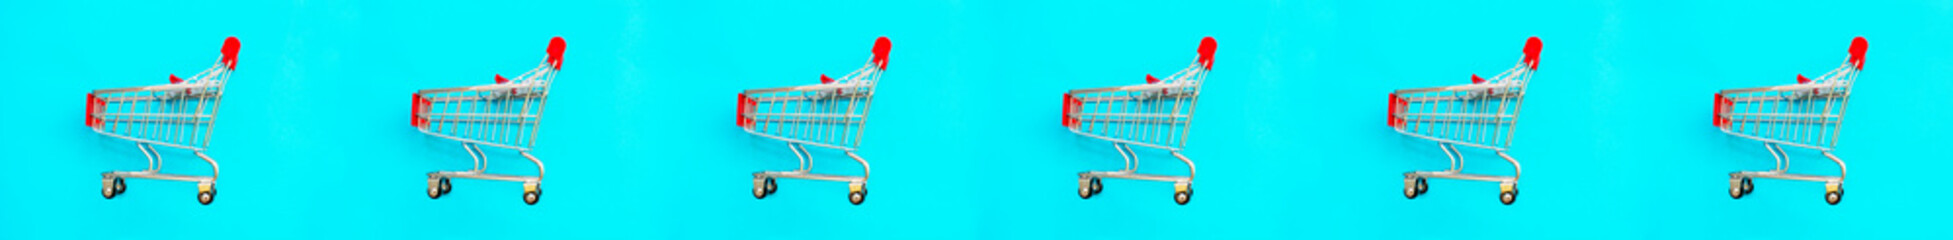 Basket on a blue background. Shopping cart in a supermarket. Sale, discount, shopaholism. Creative design. Banner.